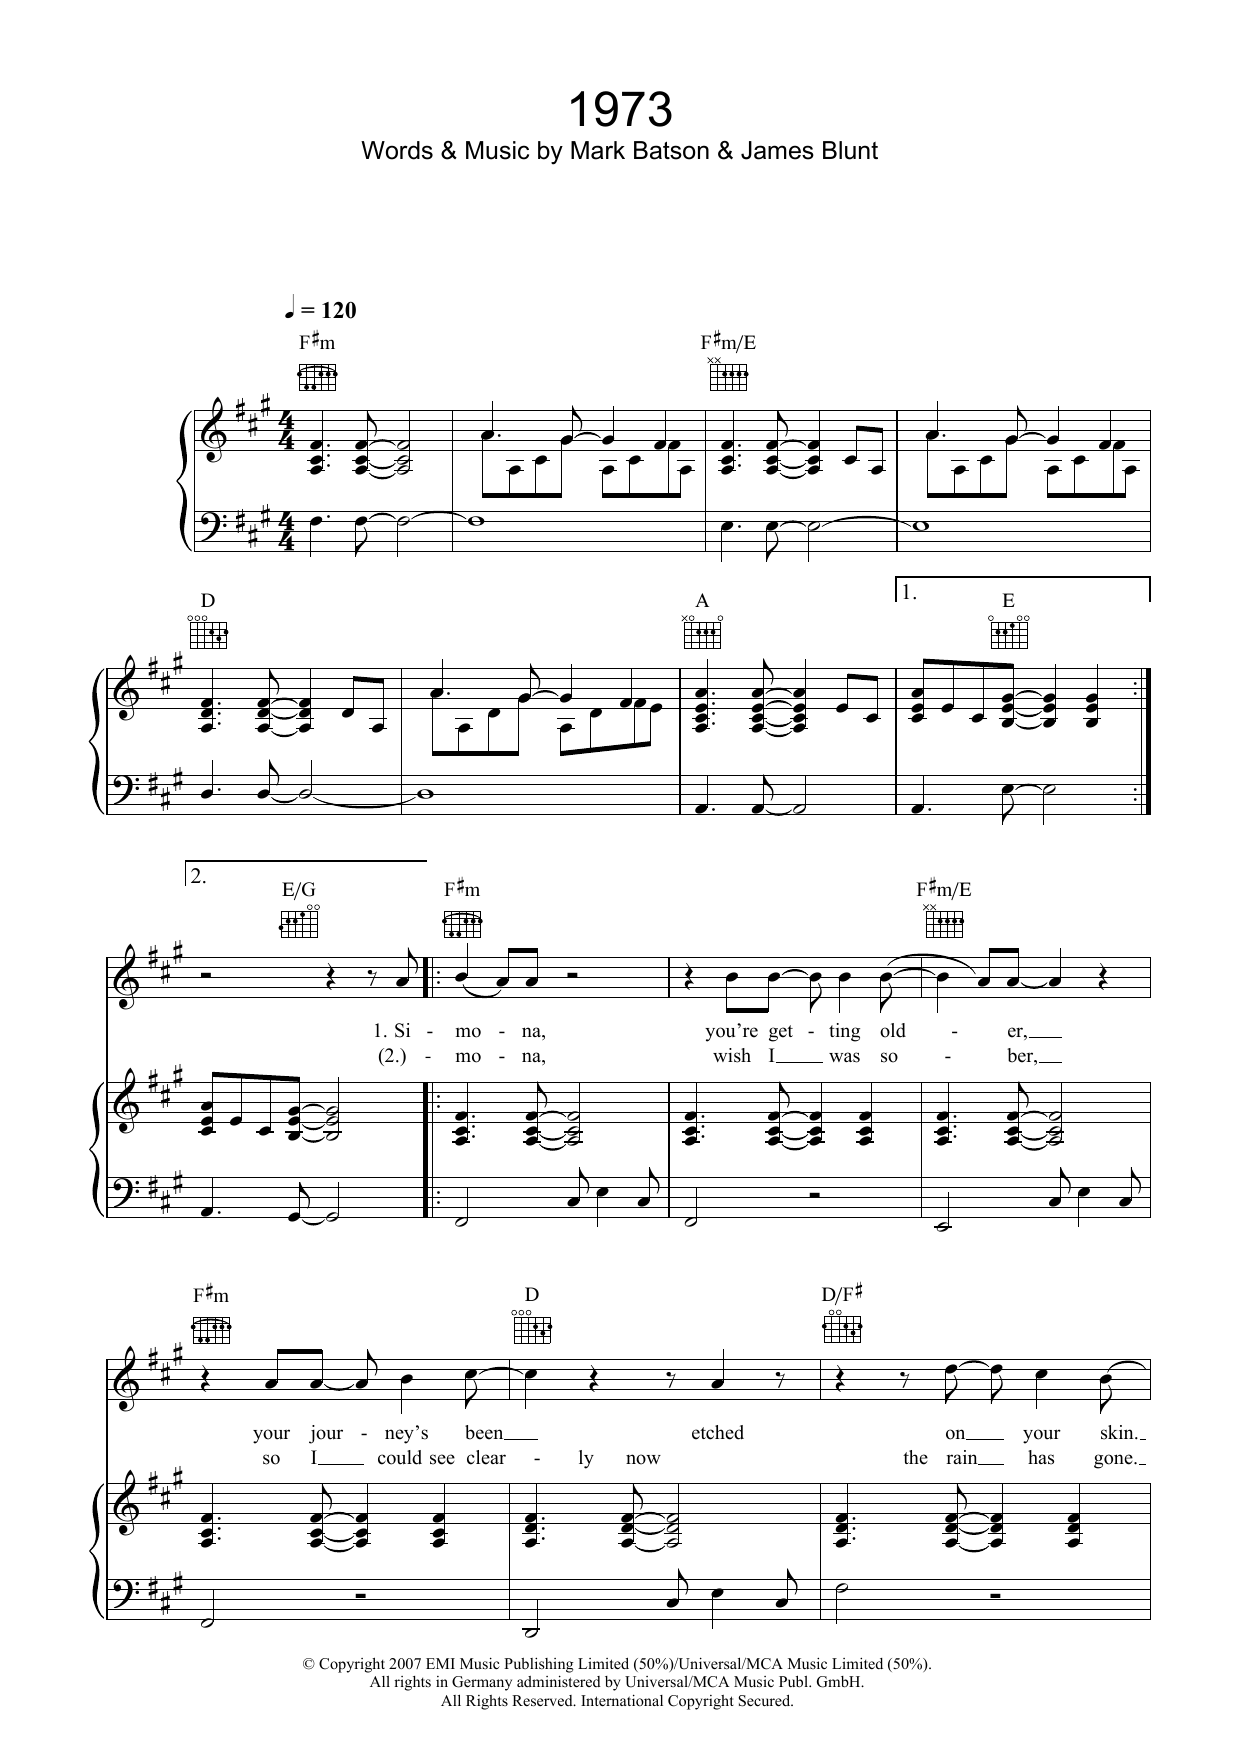 James Blunt 1973 Sheet Music Notes & Chords for Violin - Download or Print PDF